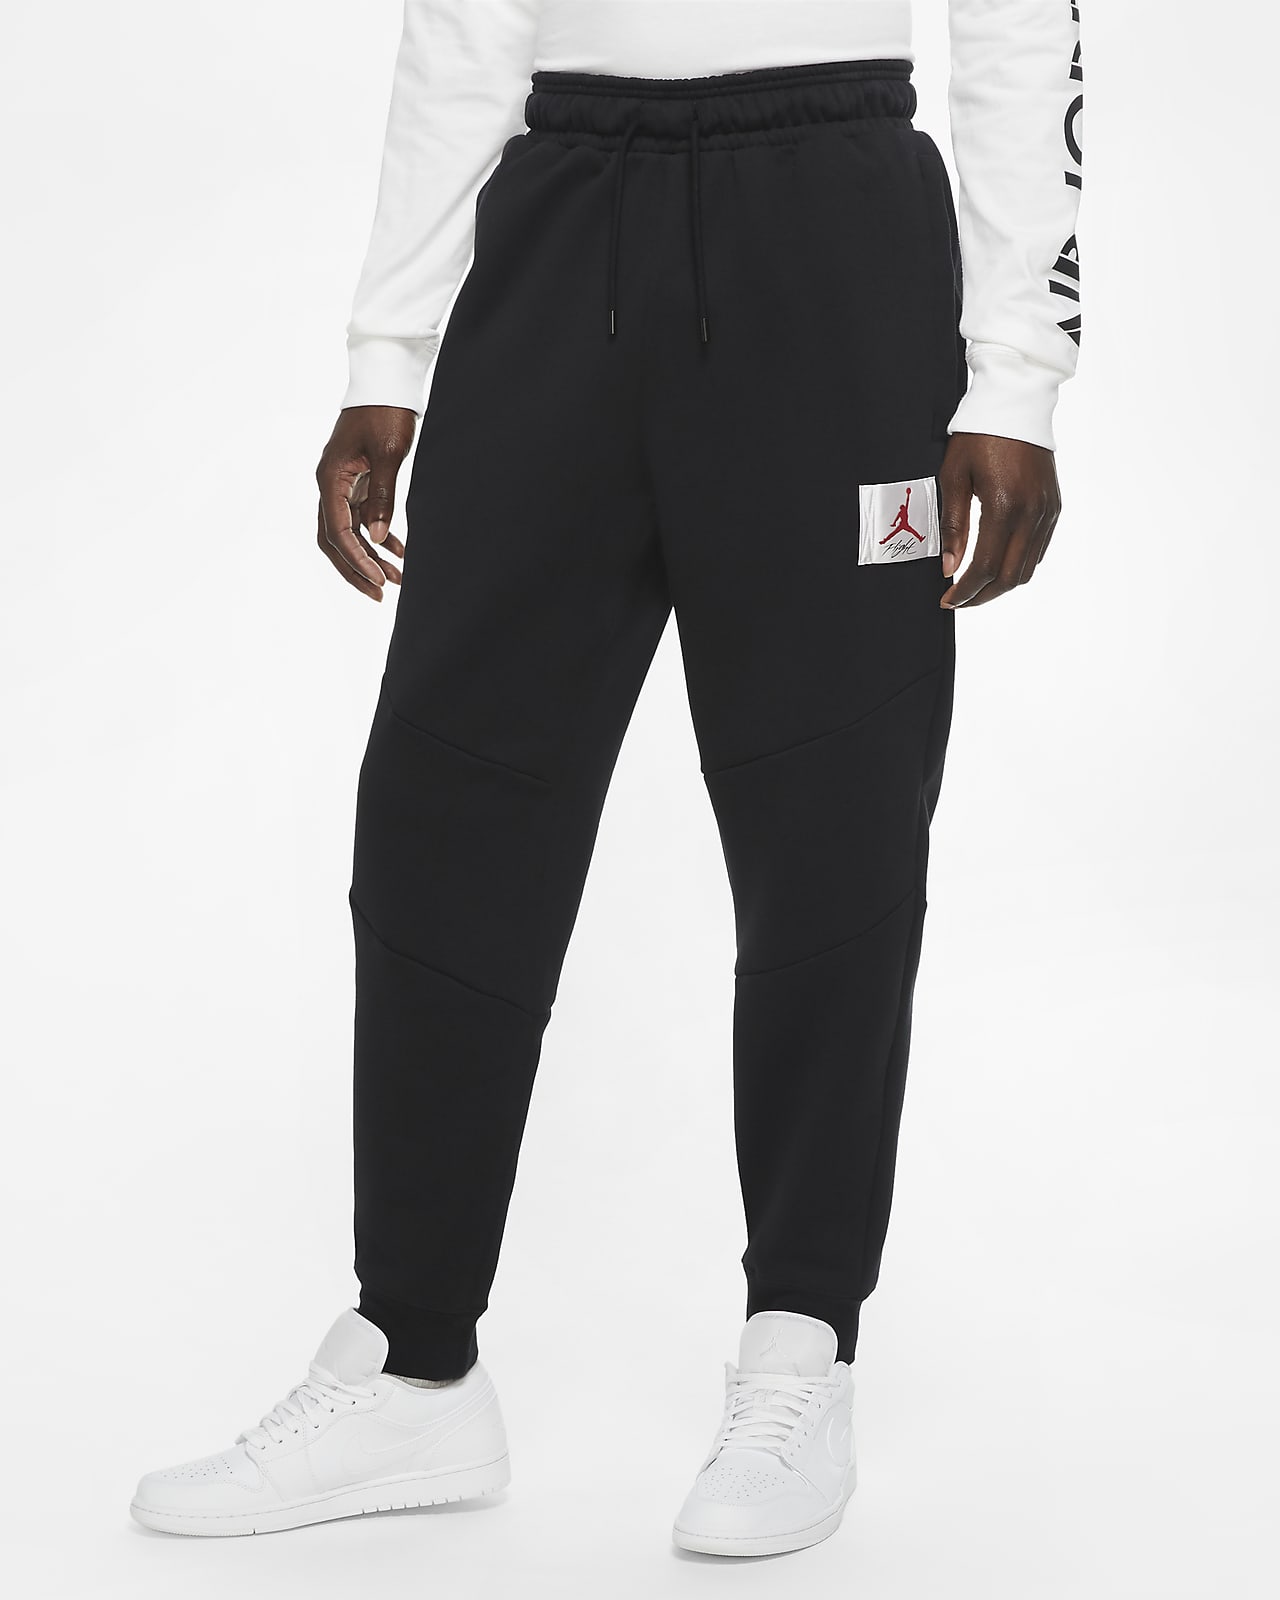 Pantalones de tejido Fleece para hombre Jordan Flight. Nike.com